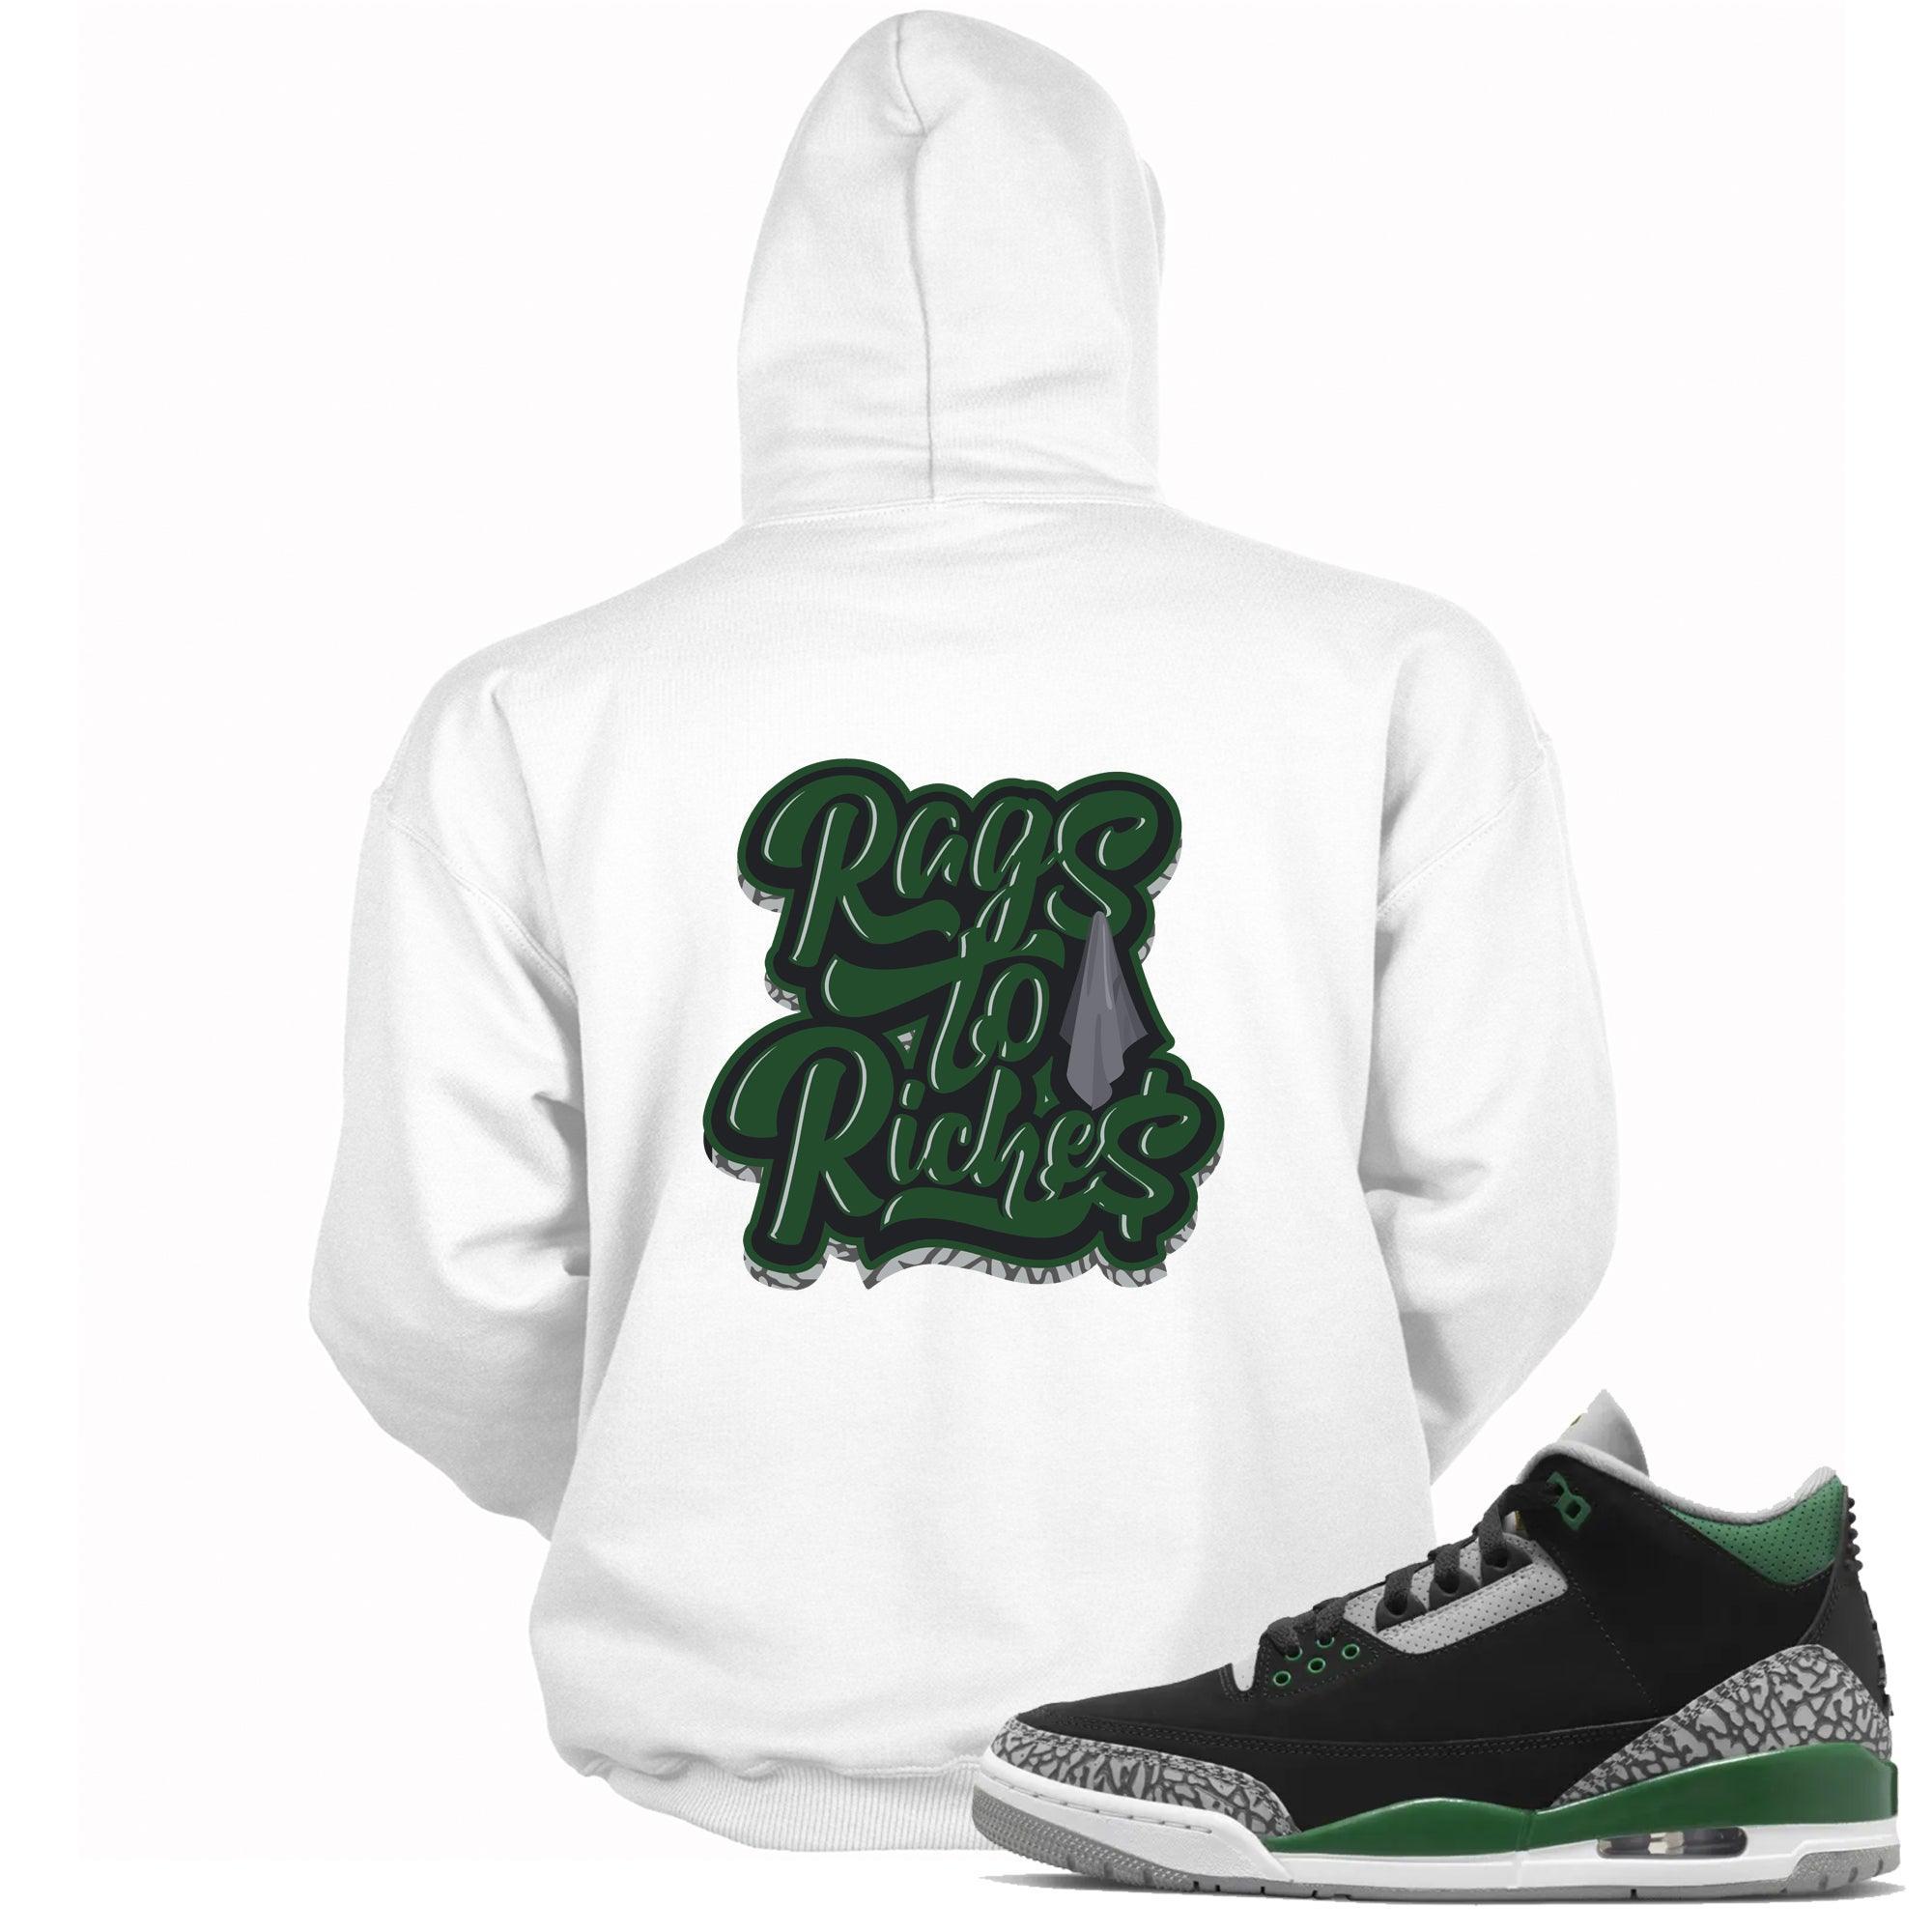 Rags To Riches Hoodie Jordan 3s Pine Green photo